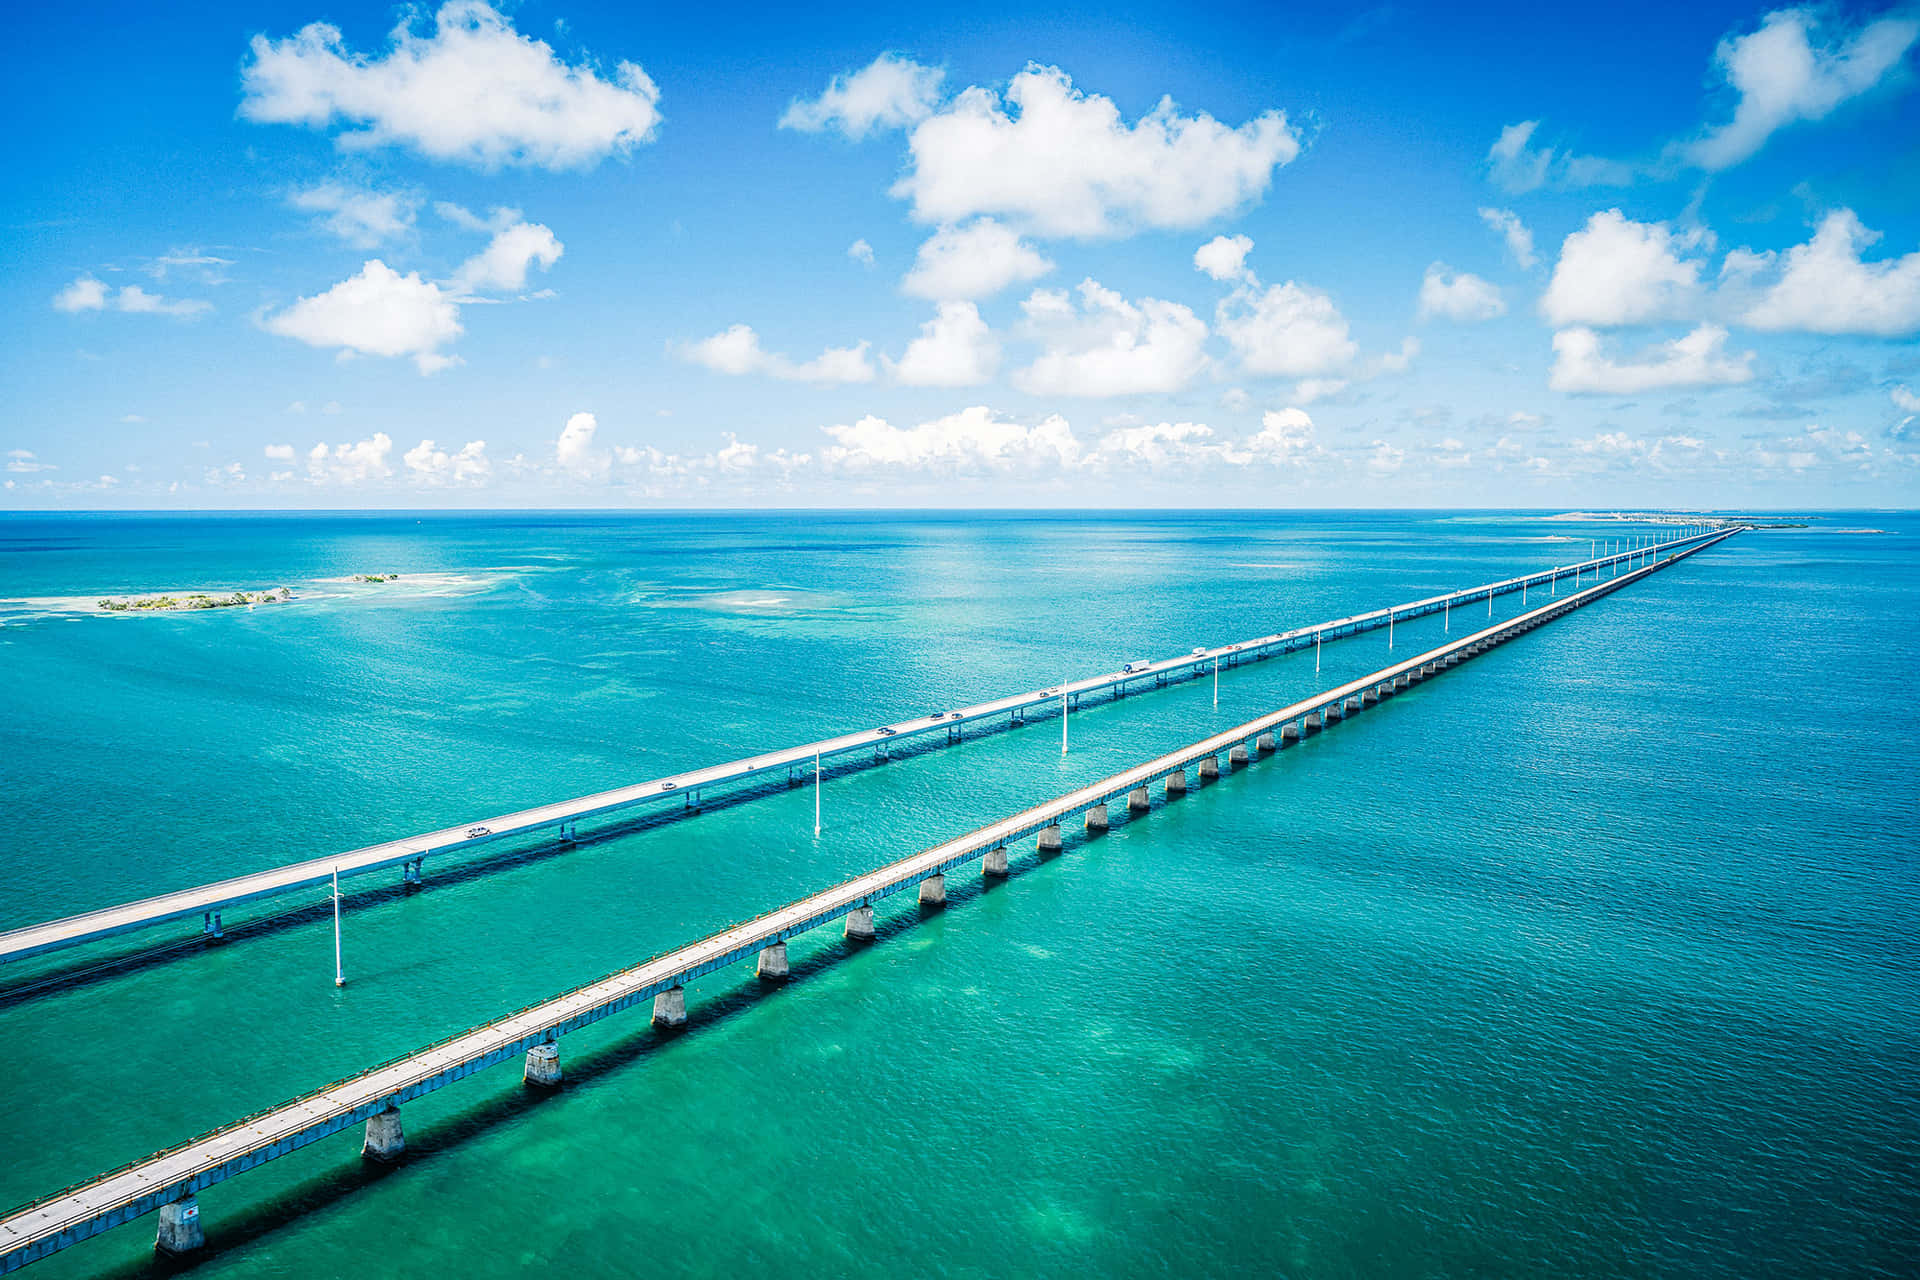 A Long Bridge Spanning The Ocean